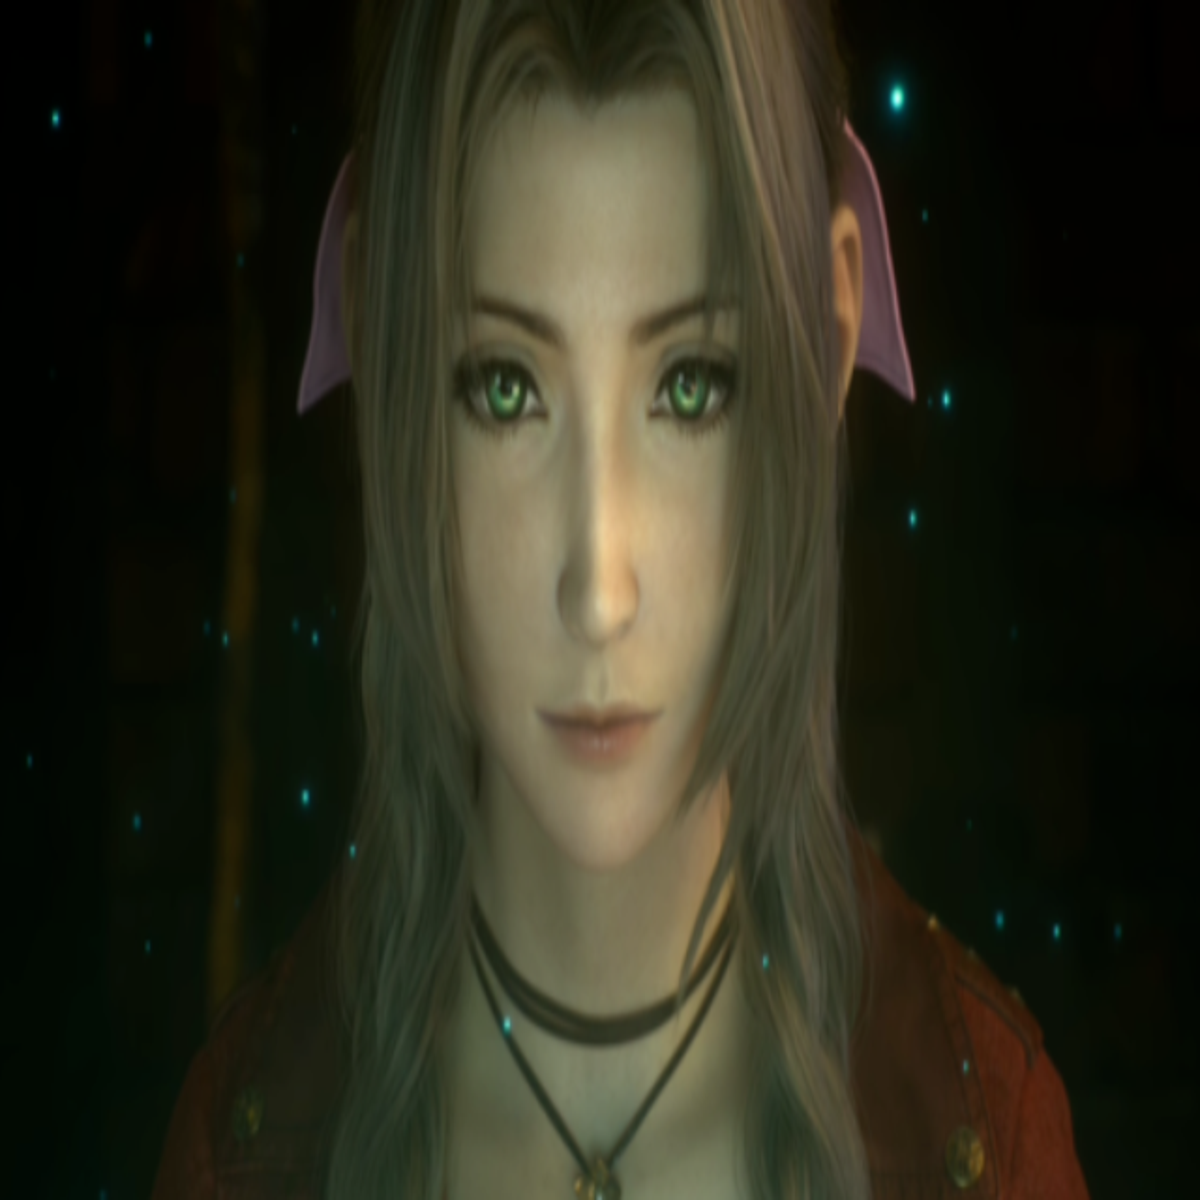 Weaponized Nostalgia: Final Fantasy VII Remake (Square Enix